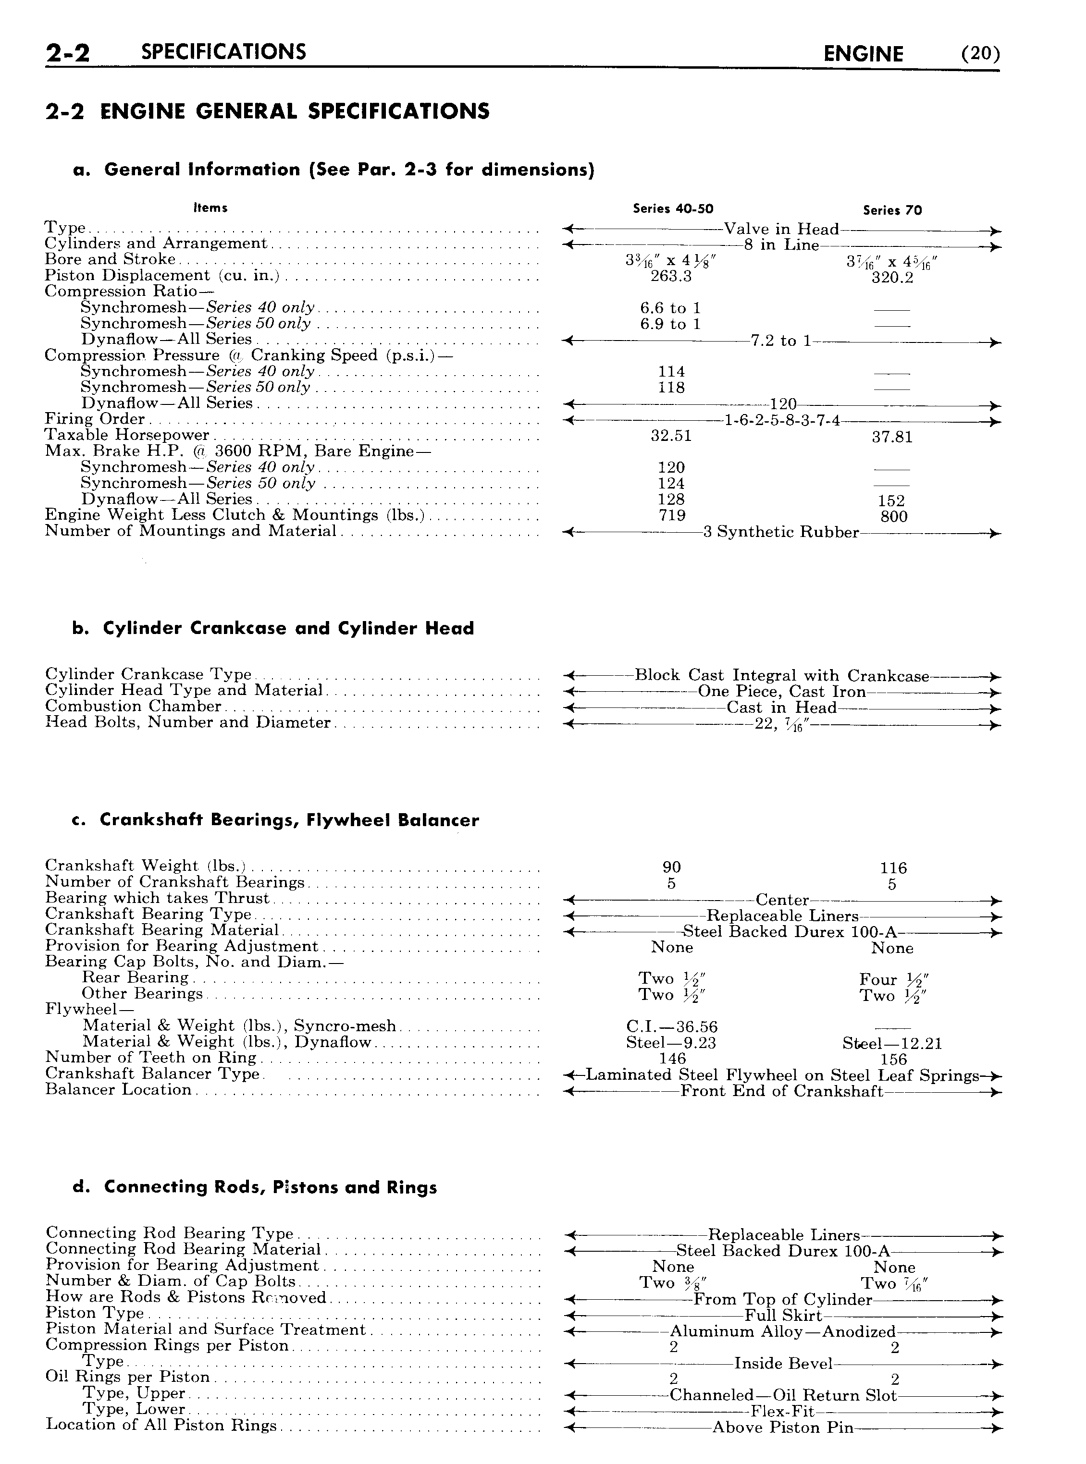 n_03 1951 Buick Shop Manual - Engine-002-002.jpg